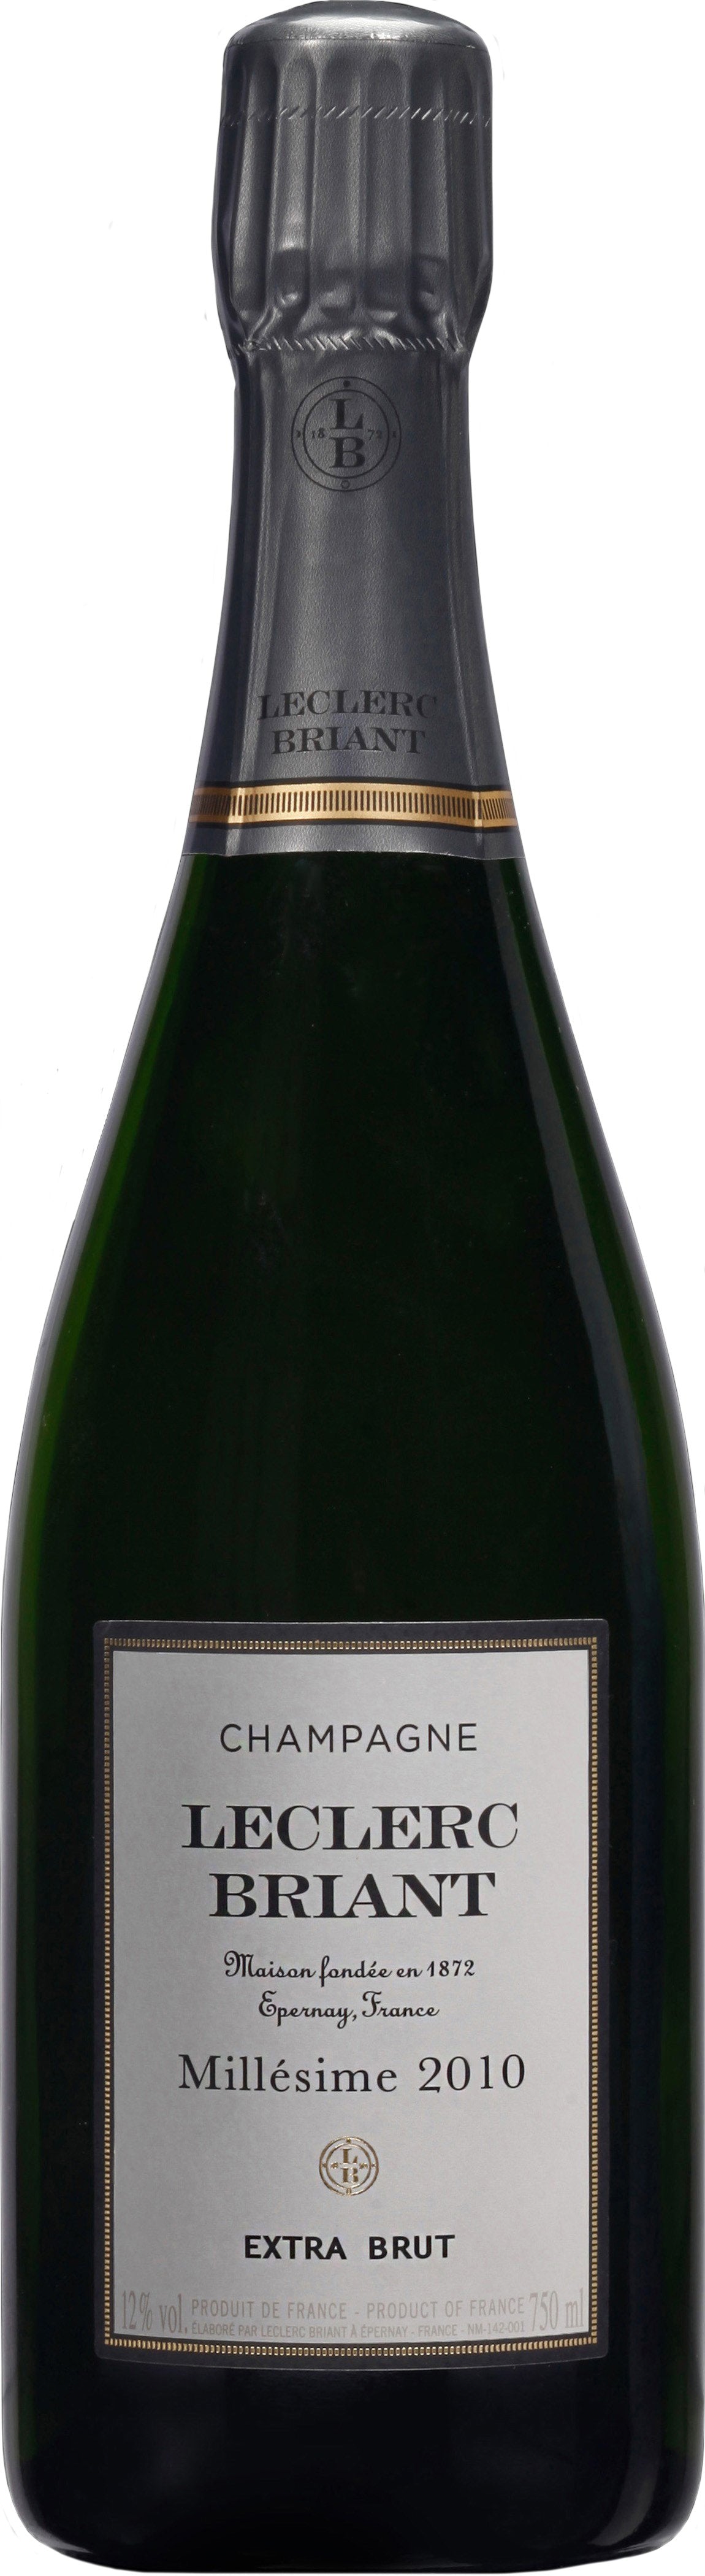 Leclerc Briant Champagne Extra Brut Millesime 2013